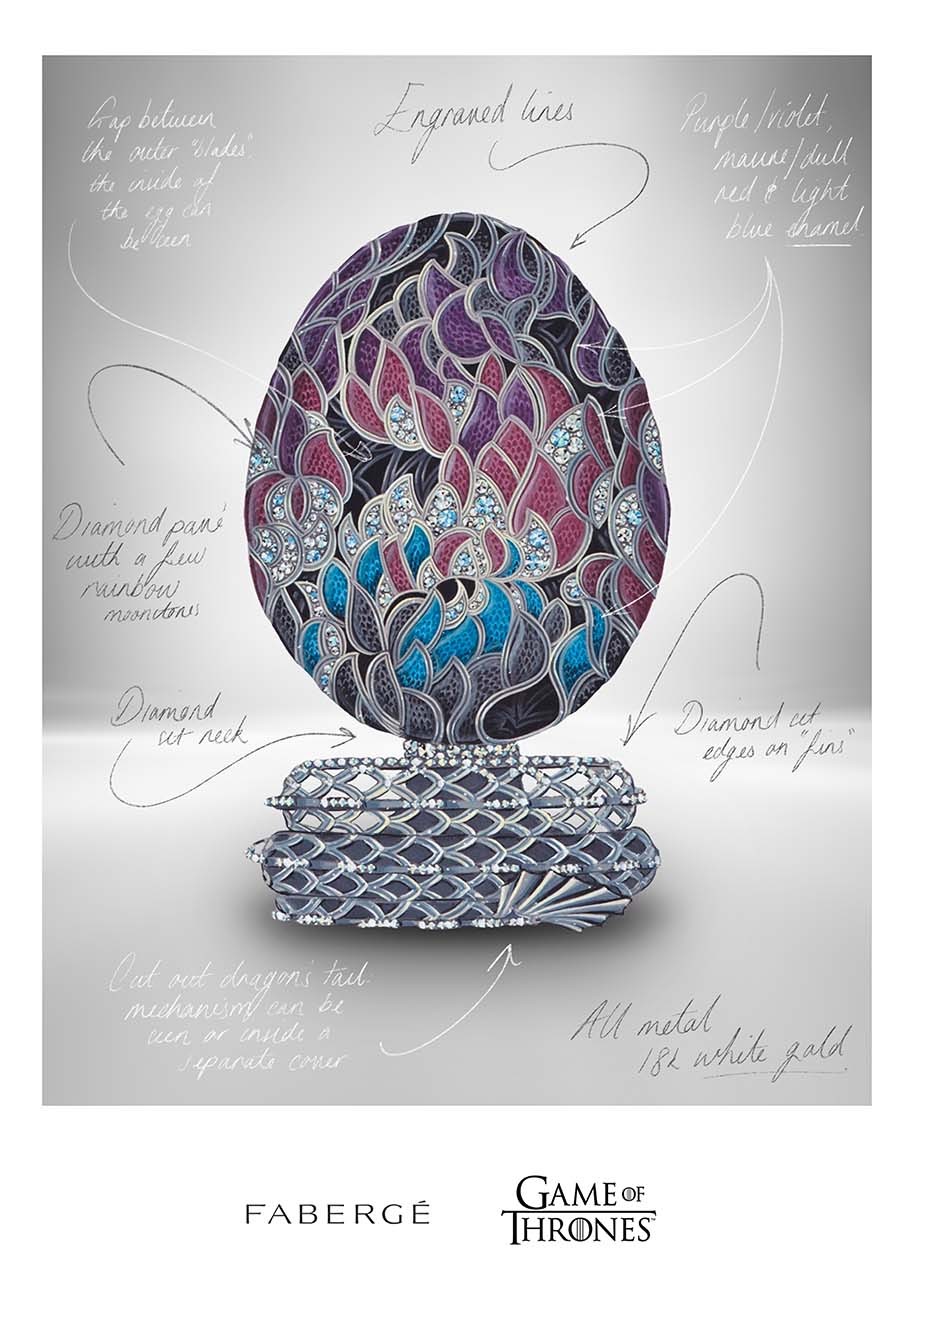 Fabergé x Game of Thrones Egg Closed copy 1617376692 compressed